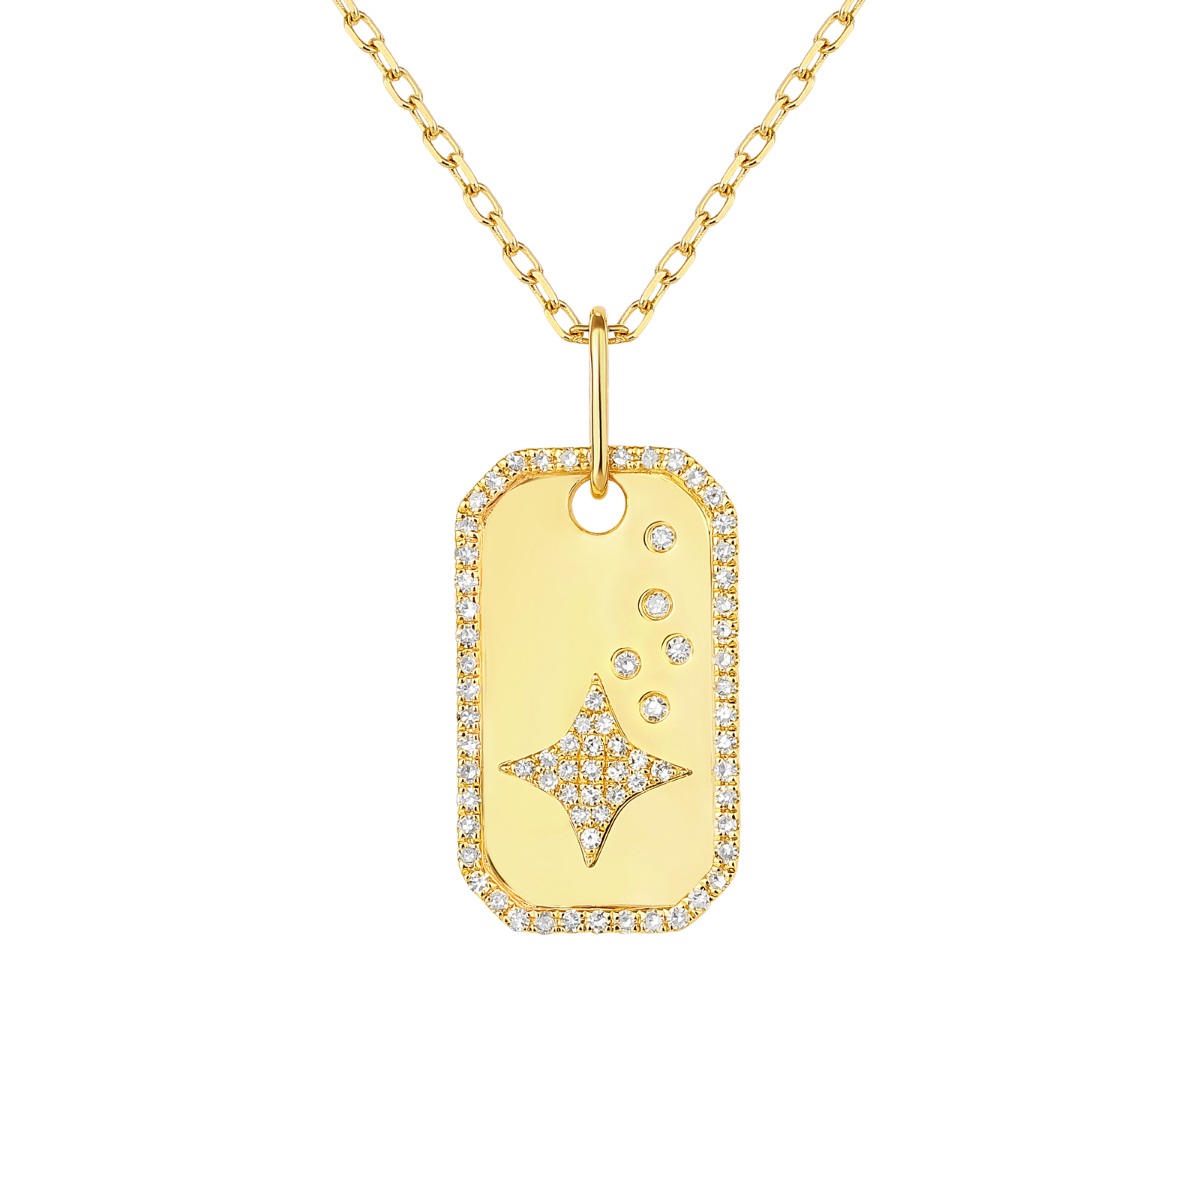 P37177WHT – 18K Yellow Gold Diamond Pendant, 0.18 TCW